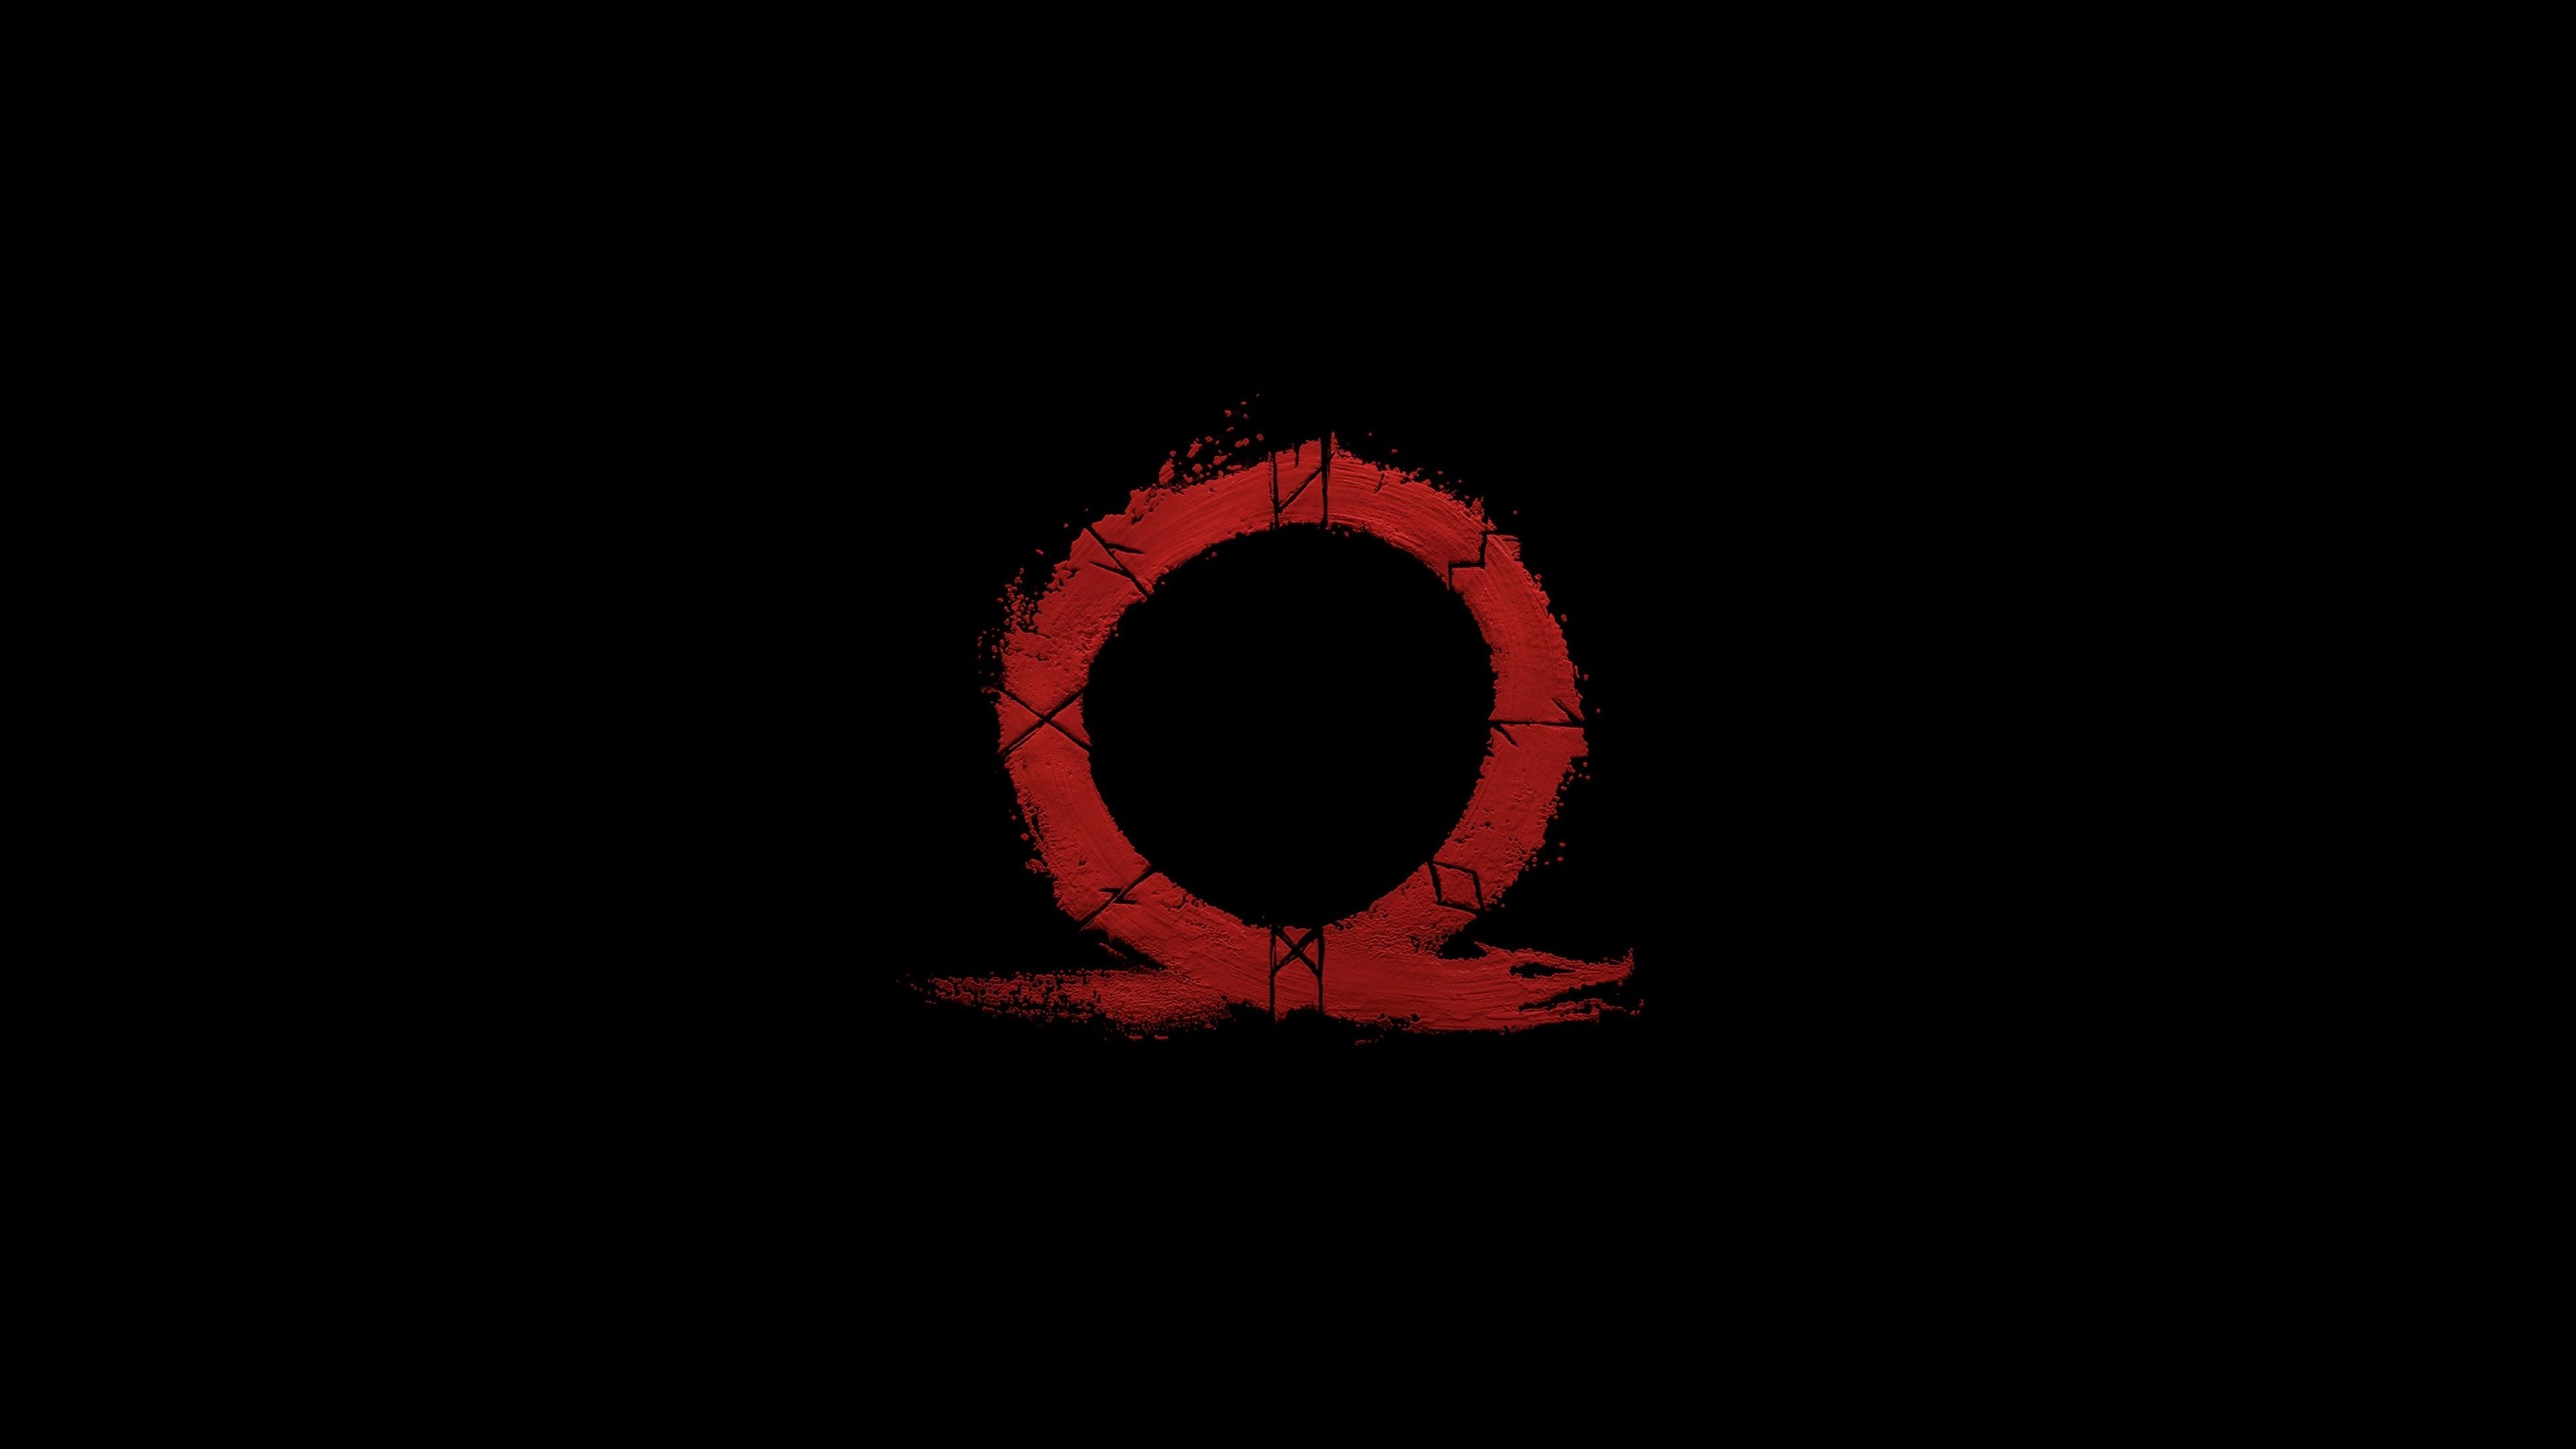 God of war omega logo 4k. God of war, Kratos god of war, iPhone wallpaper